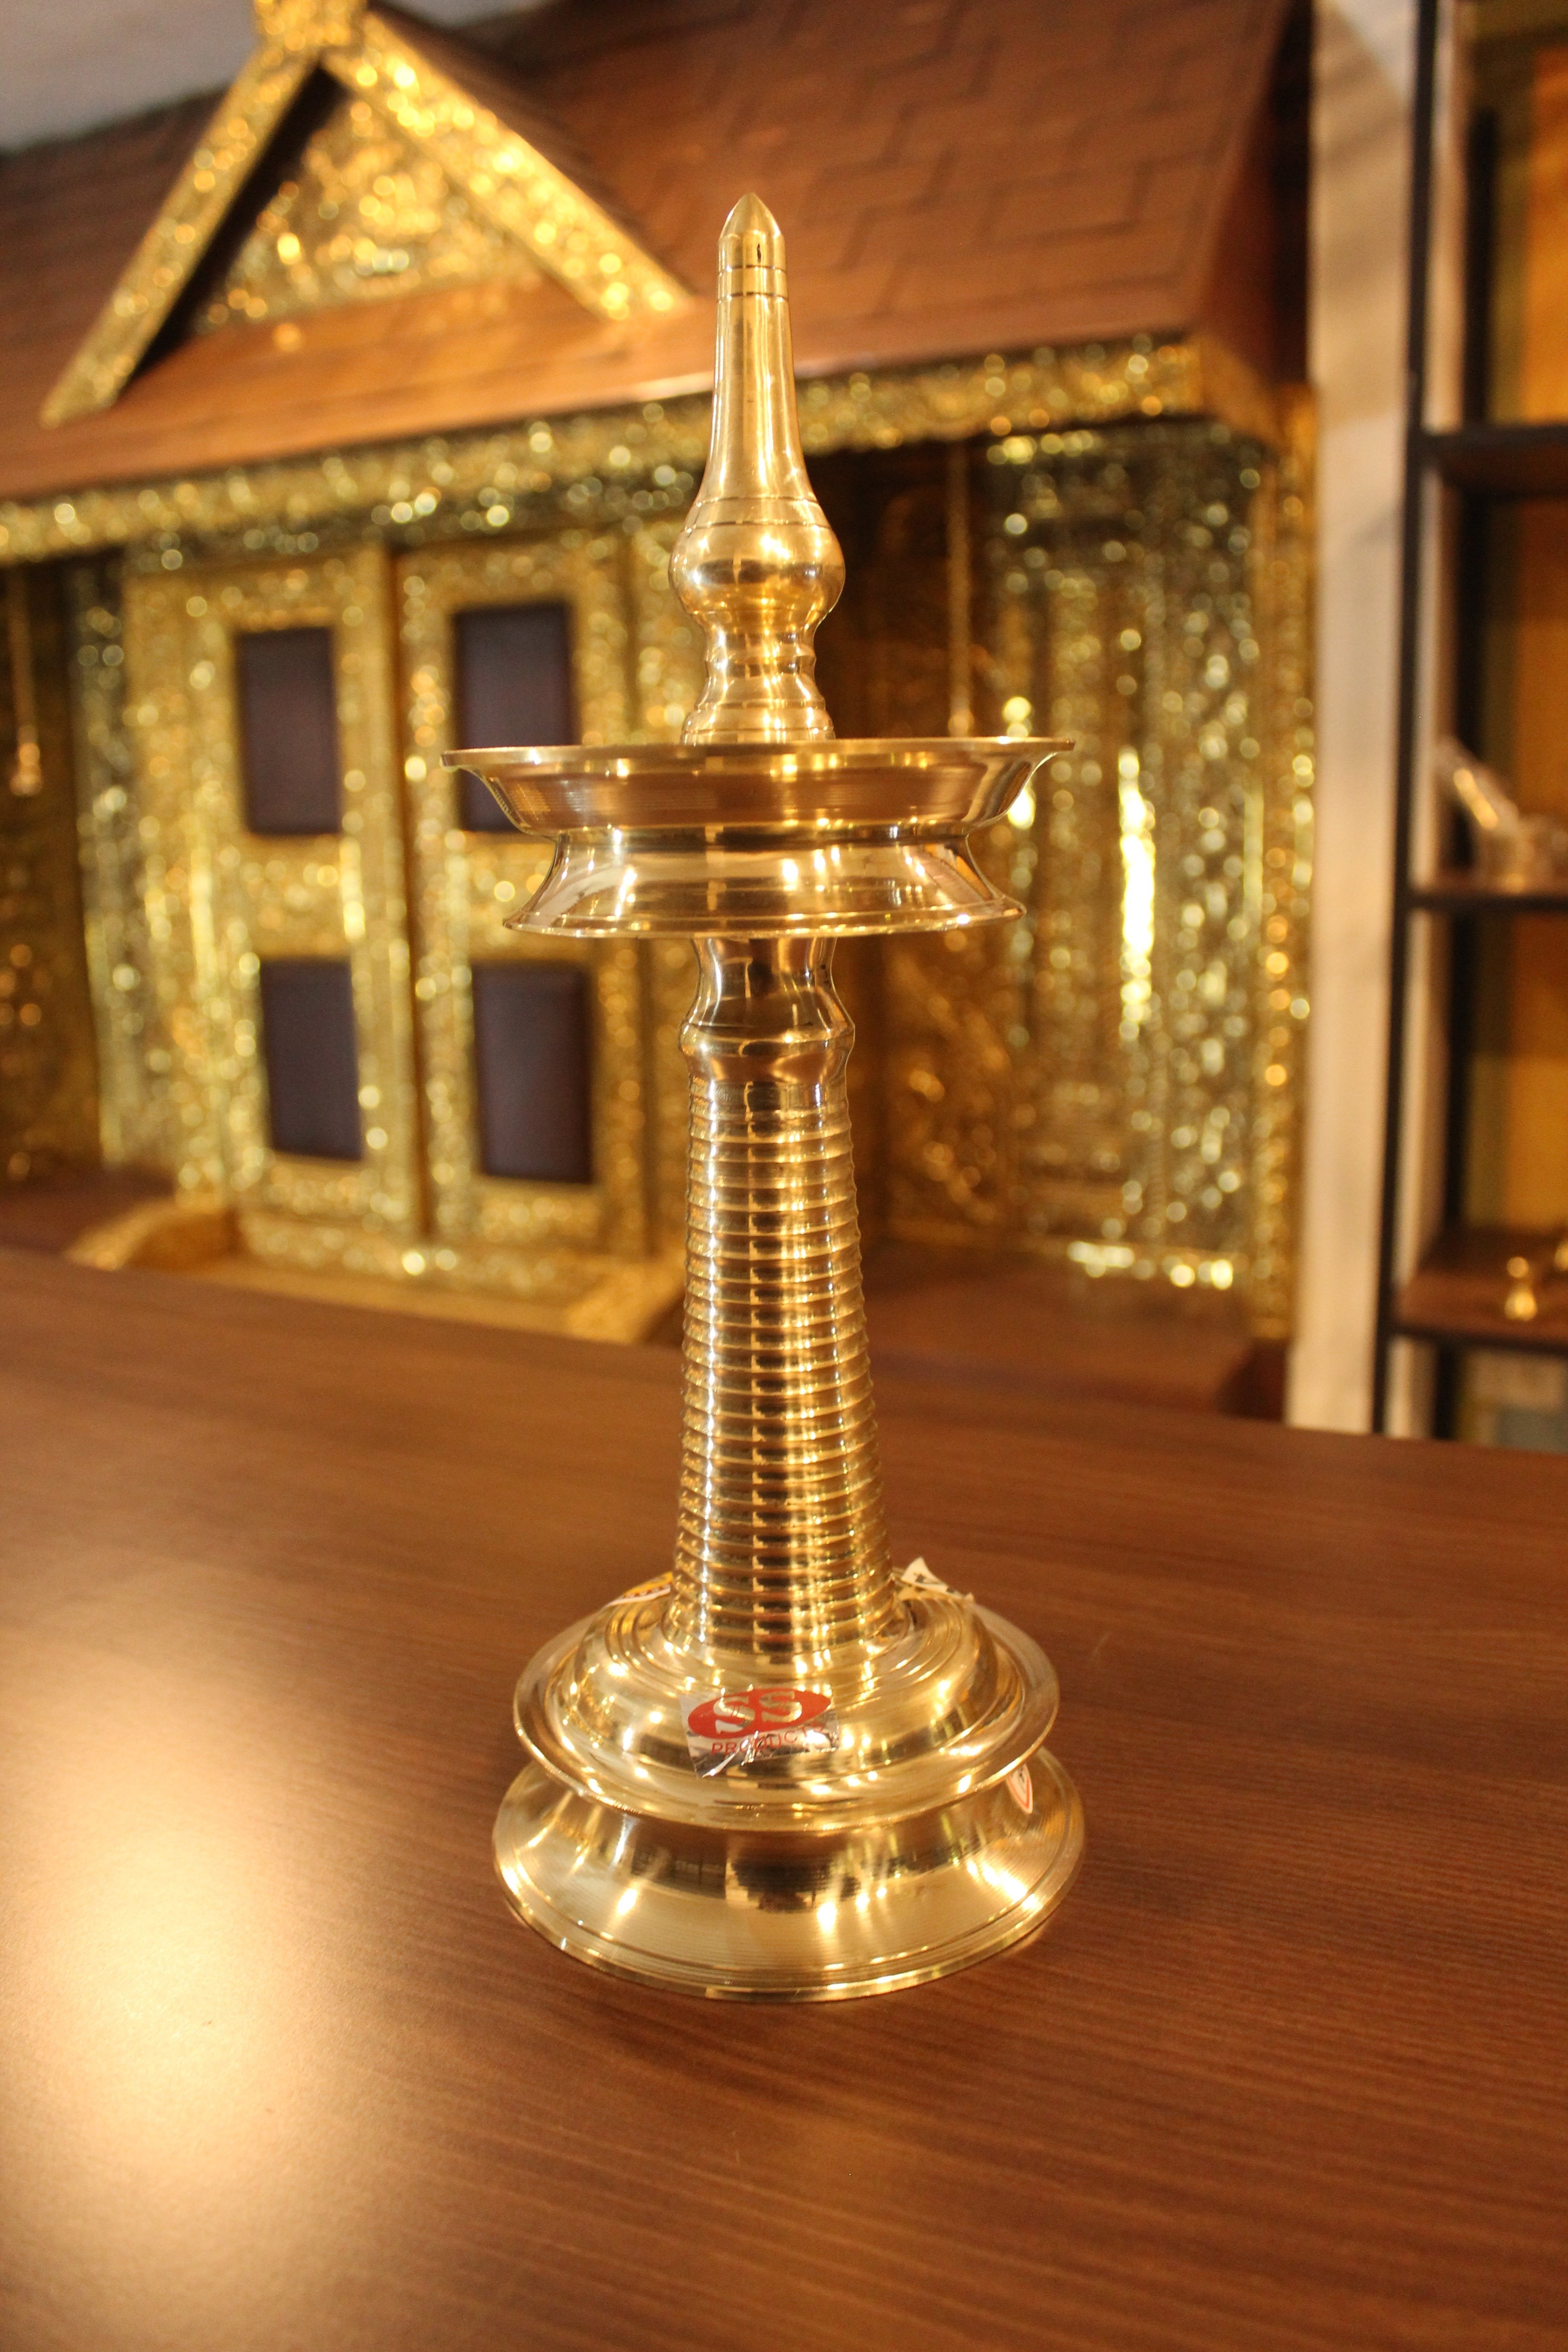 Nilavilakku Brass - Premium Brass from Cherakulam Vessels & Crockery - Just Rs. 1350! Shop now at Cherakulam Vessels & Crockery